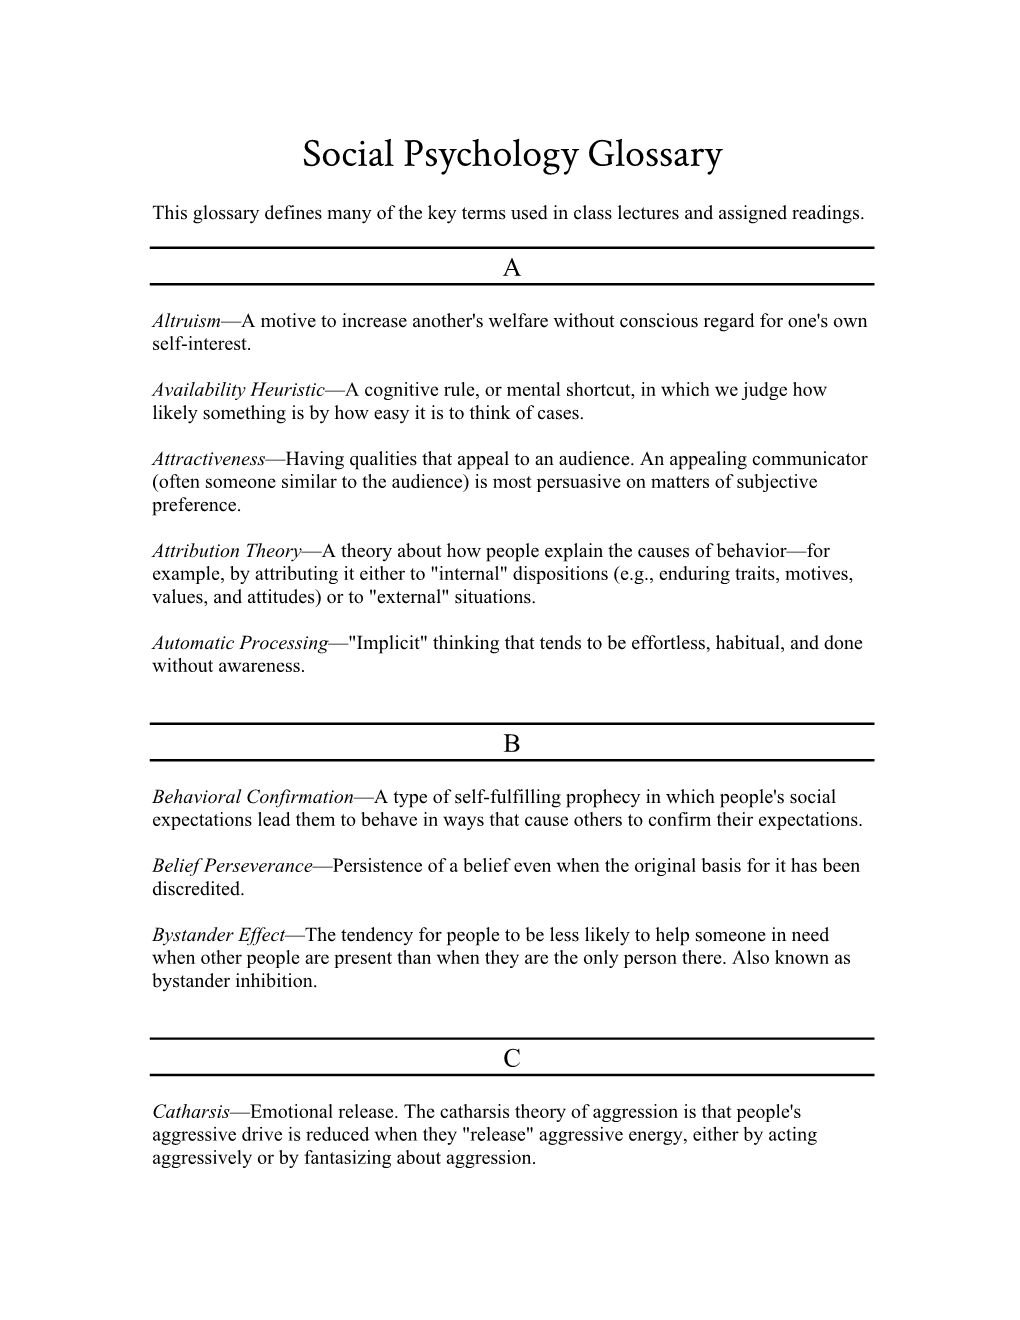 Social Psychology Glossary